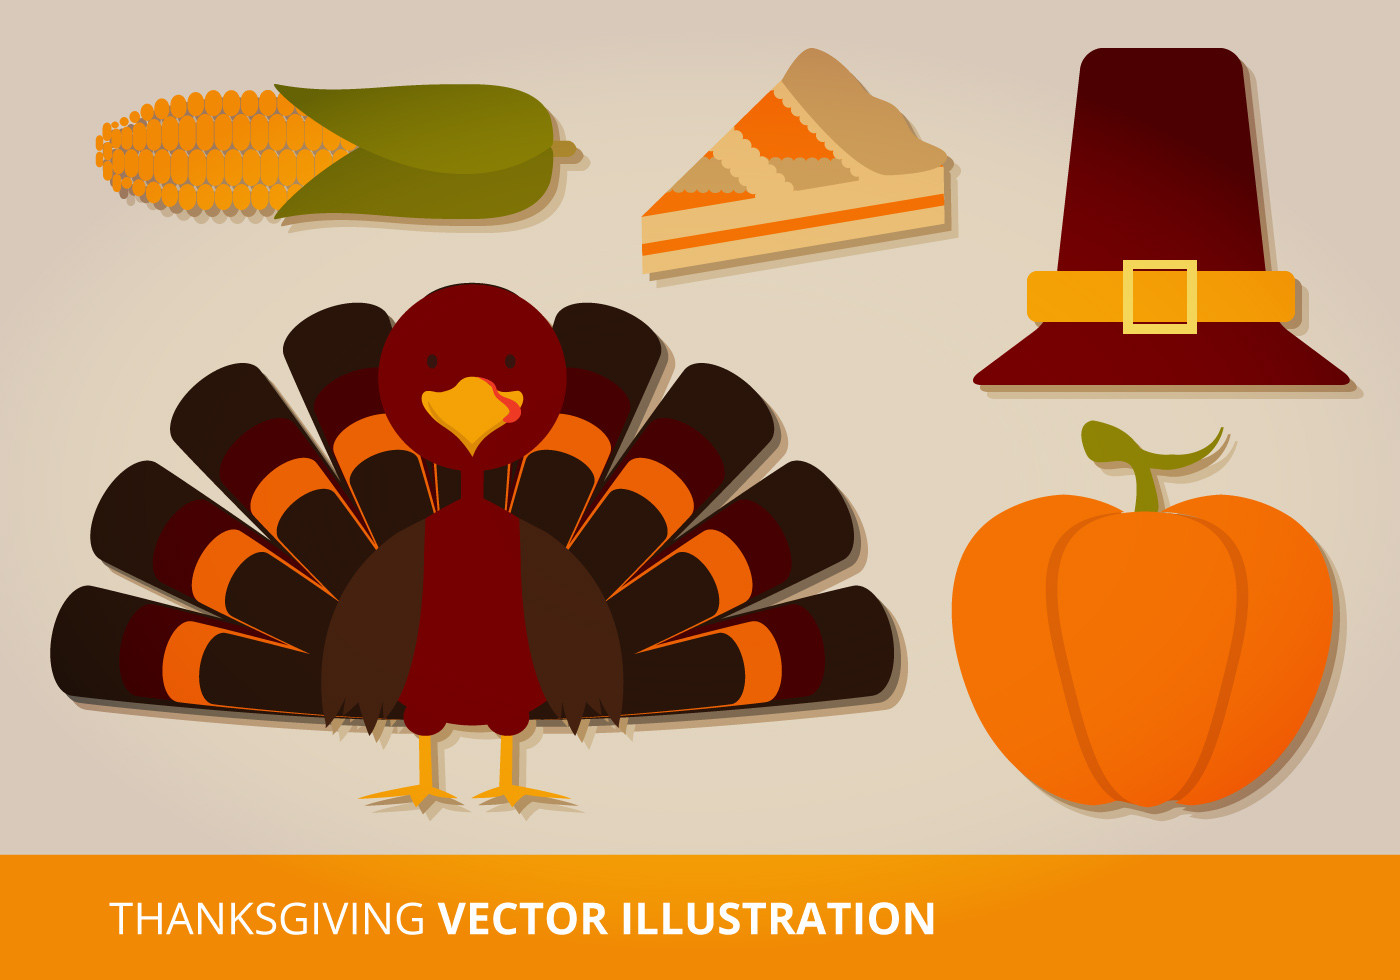 Thanksgiving Turkey Vector
 Thanksgiving Vector Set Download Free Vector Art Stock